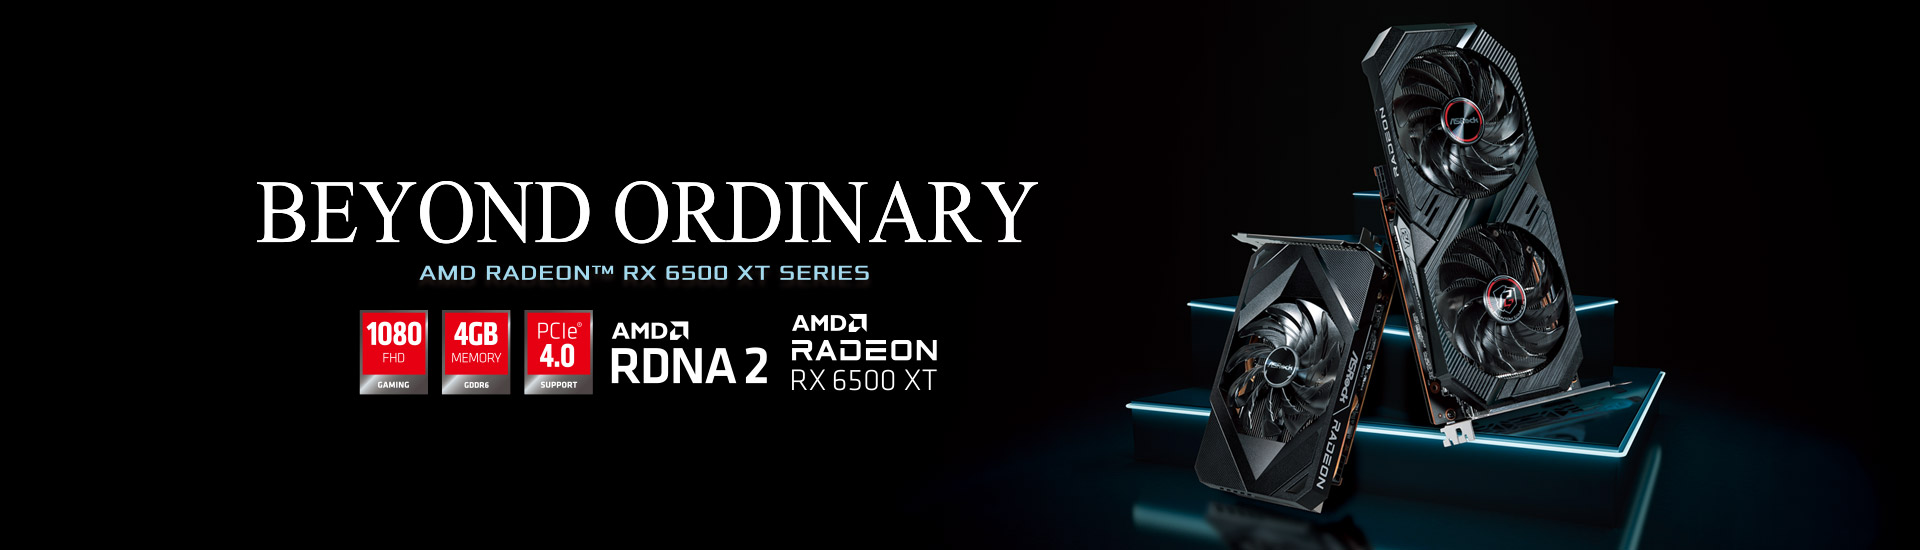 AMD Radeon RX 6500 XT Series